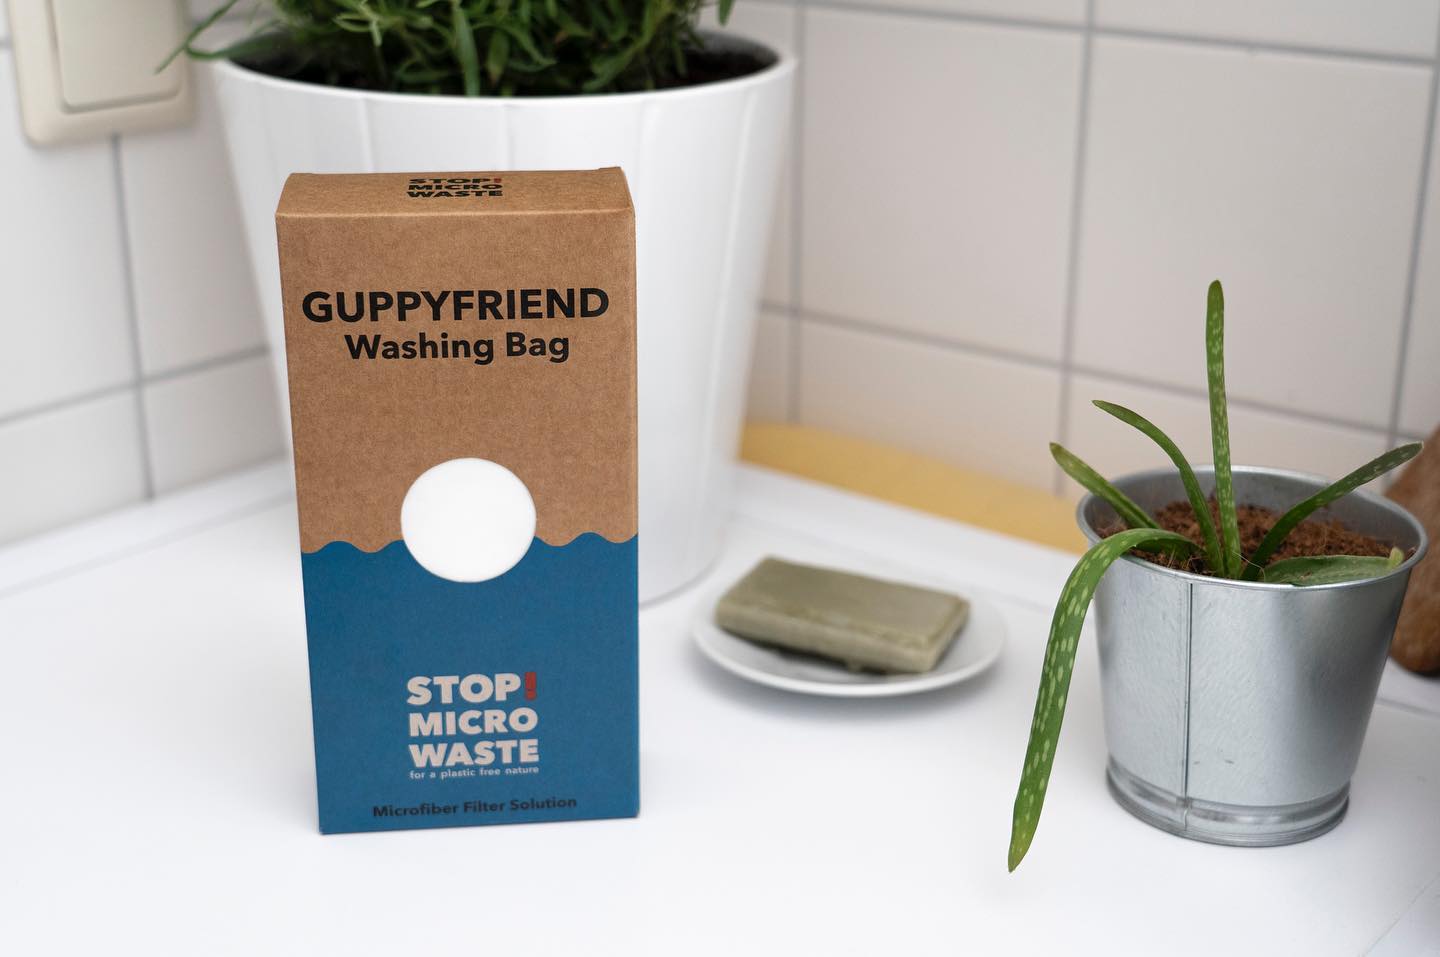 Guppyfriend Microwaste Washing Bag